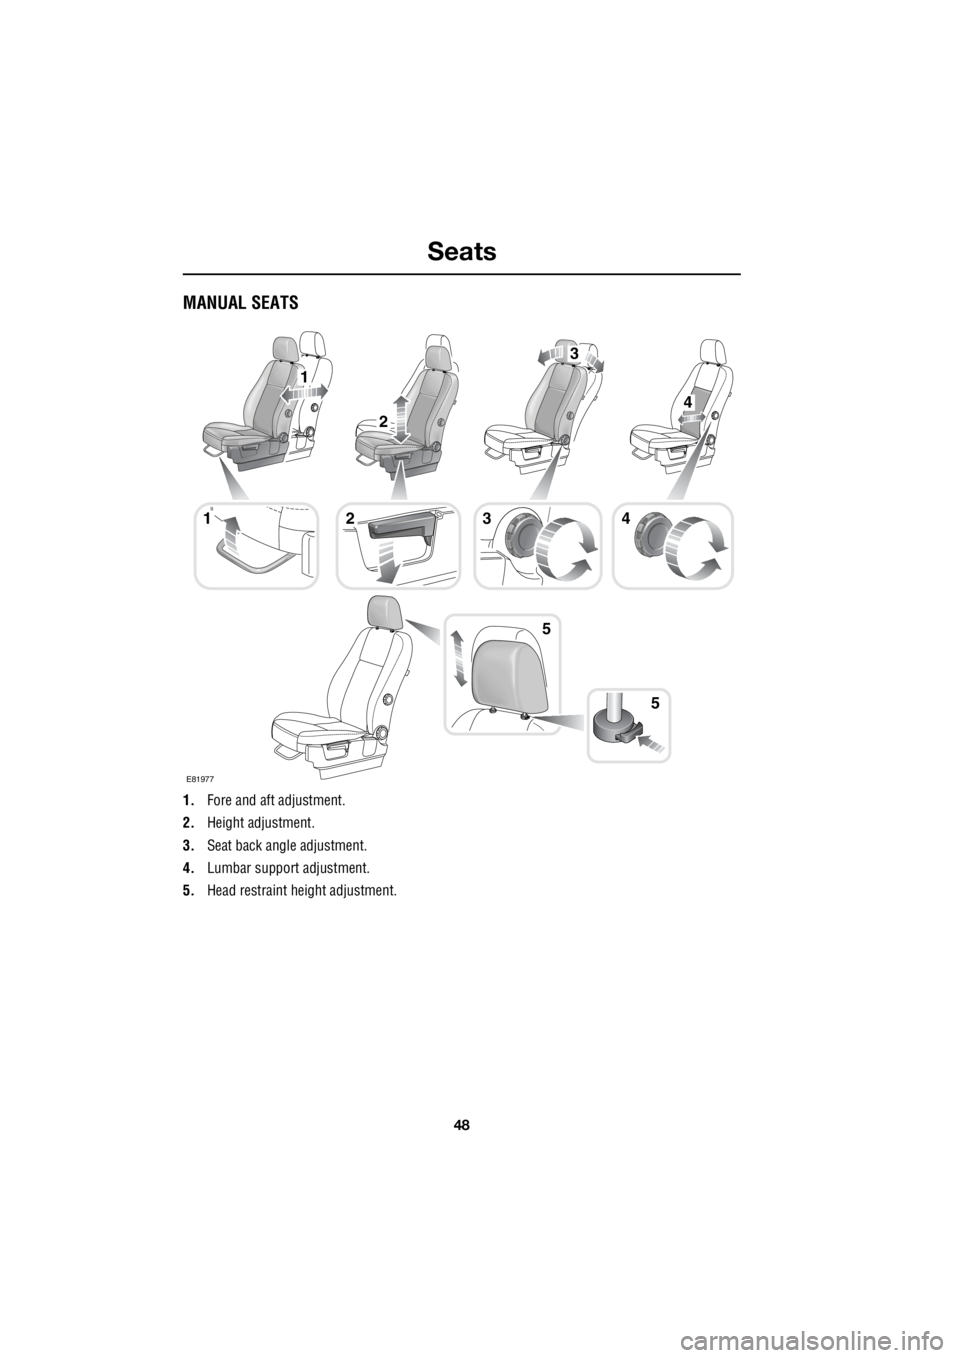 LAND ROVER FRELANDER 2 2006  Repair Manual Seats
48
L
MANUAL SEATS
1. Fore and aft adjustment. 
2.  Height adjustment. 
3.  Seat back angle adjustment. 
4.  Lumbar support adjustment. 
5.  Head restraint he ight adjustment.
1
5
1
2
4
3
423
5
E